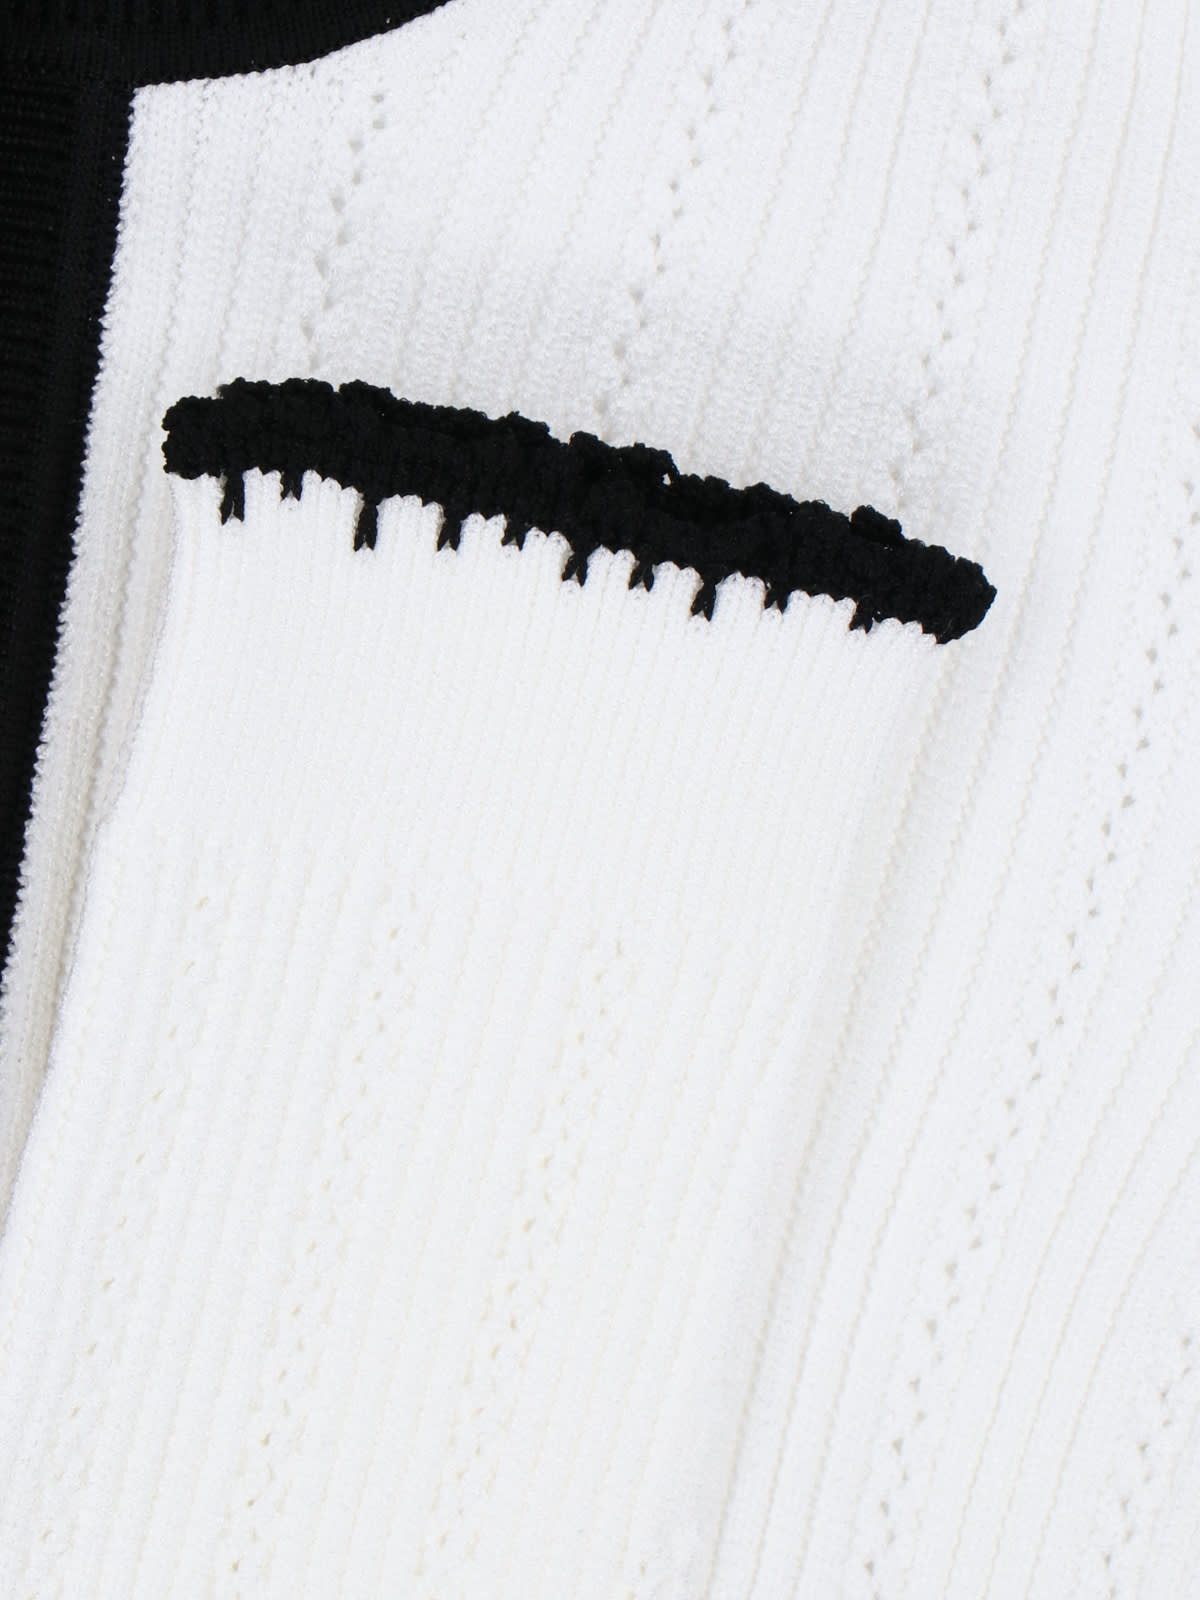 Shop Balmain Knitted Cardigan In White